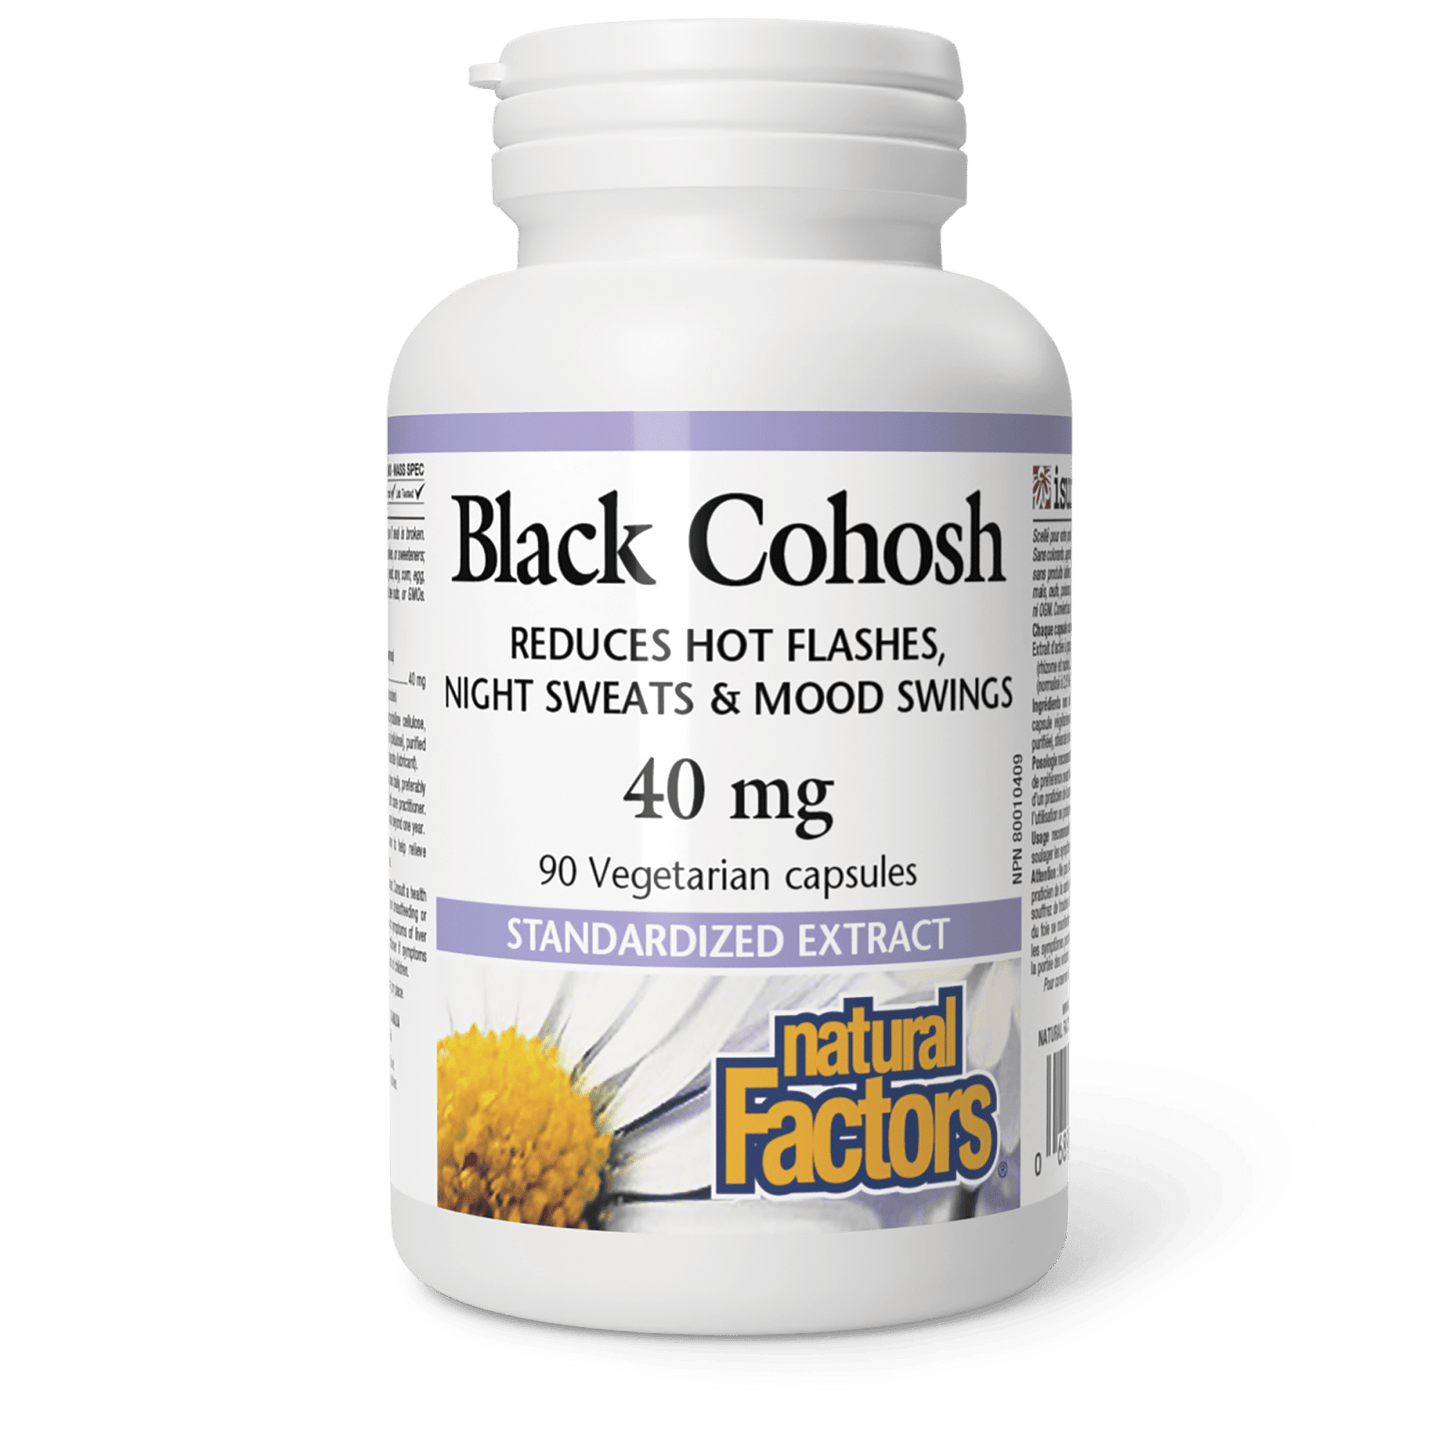 Black Cohosh Standardized Extract 40 mg, Natural Factors|v|image|4925